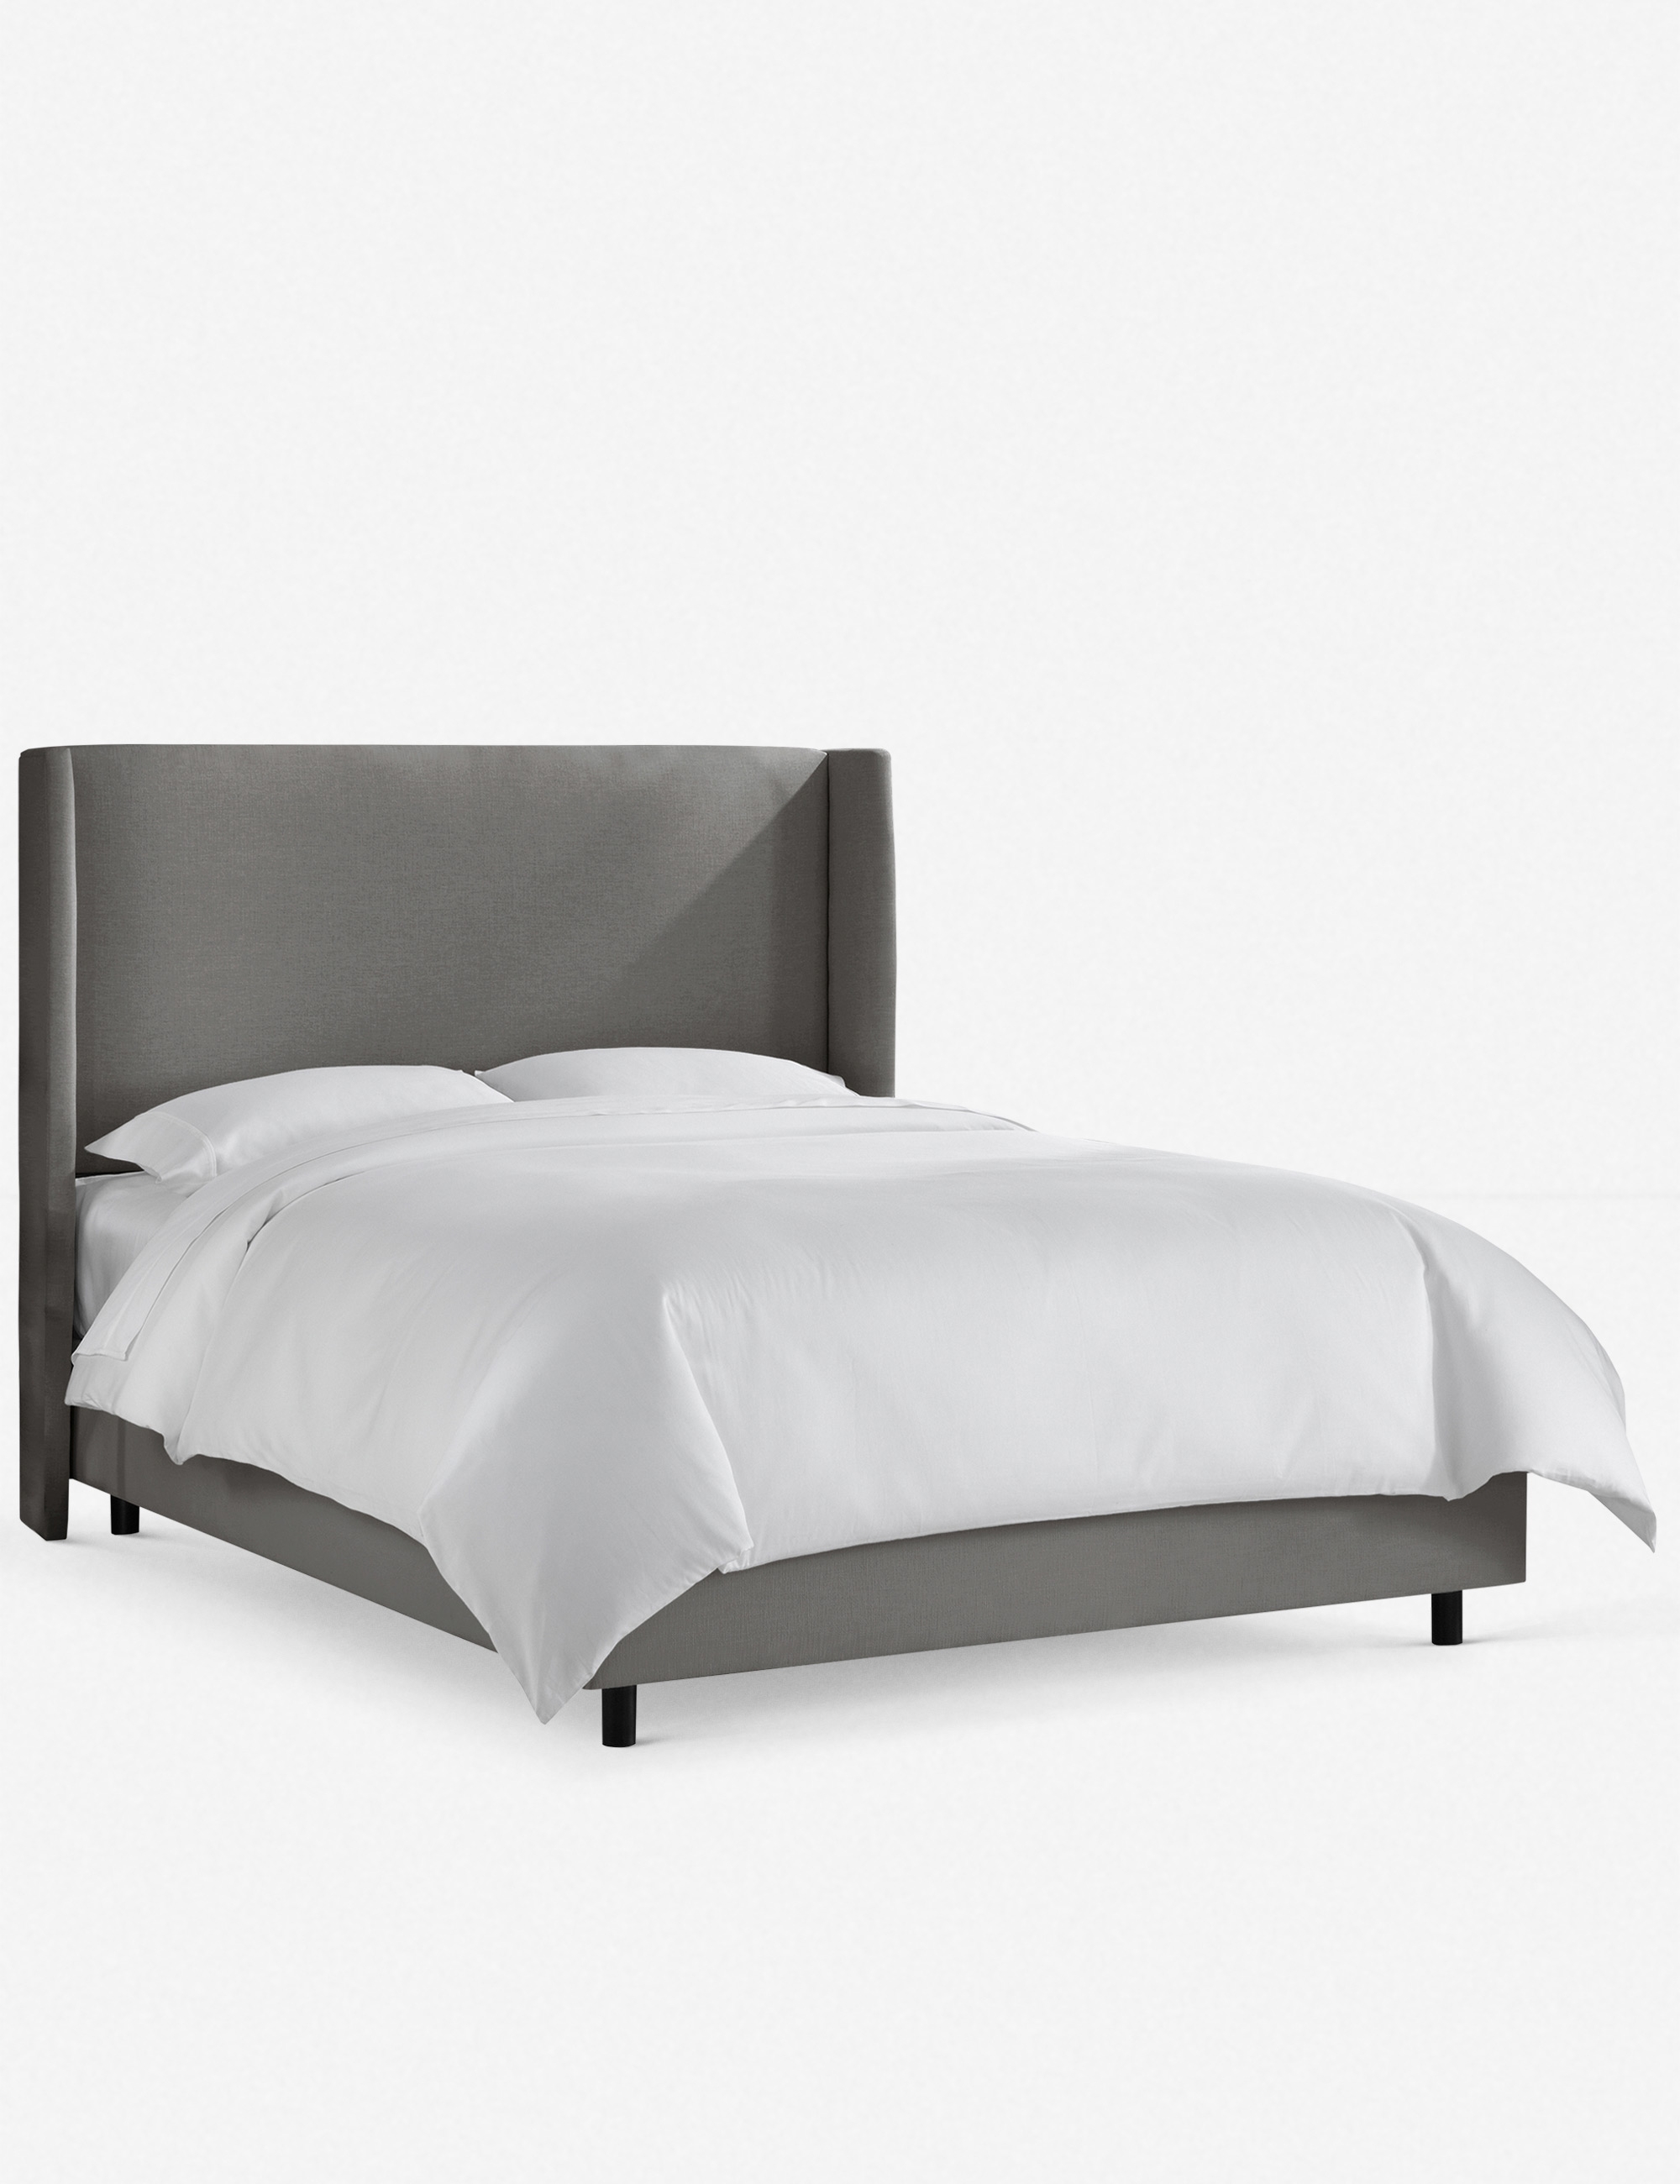 Adara Linen Bed, Steel velvet King - Image 0